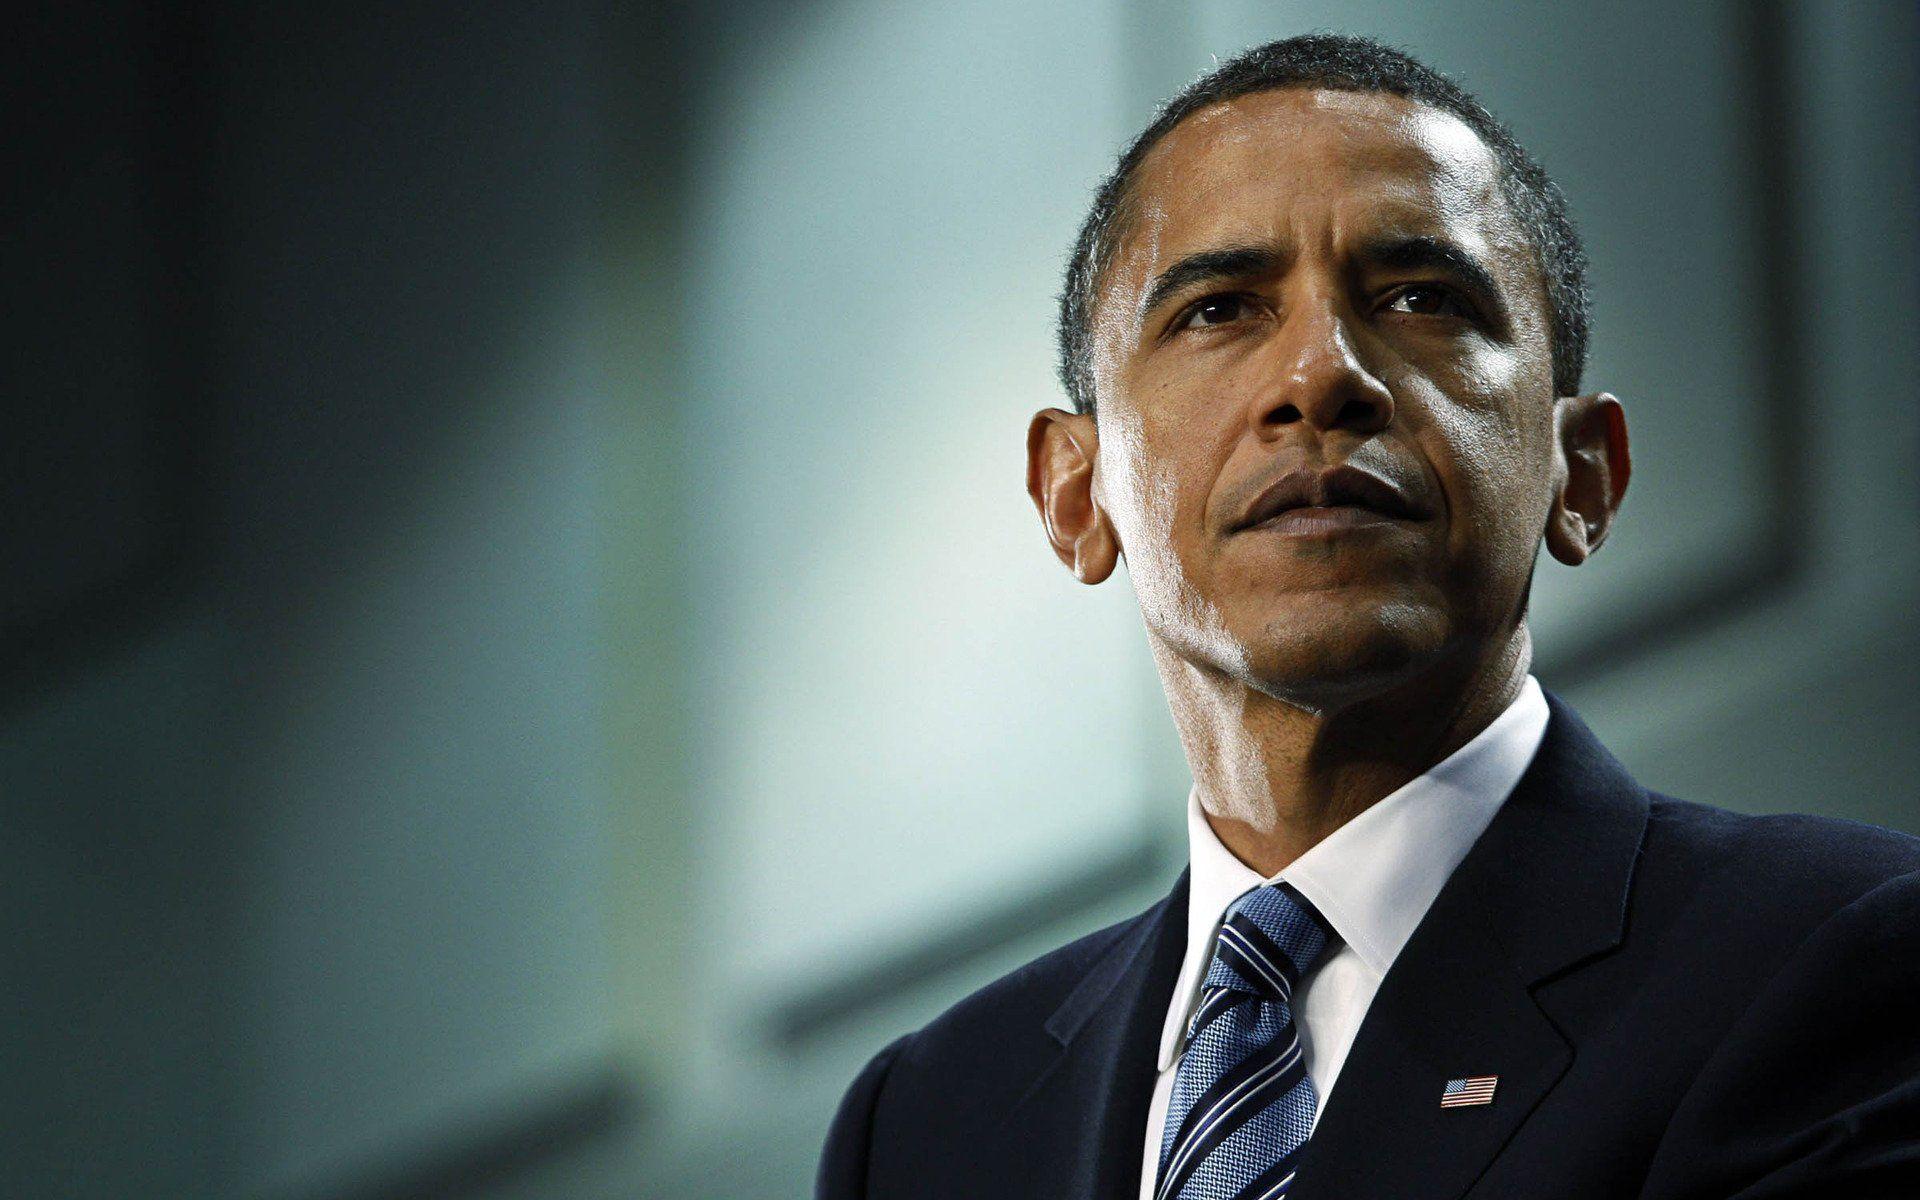 Barack Obama HD Wallpaper and Background Image